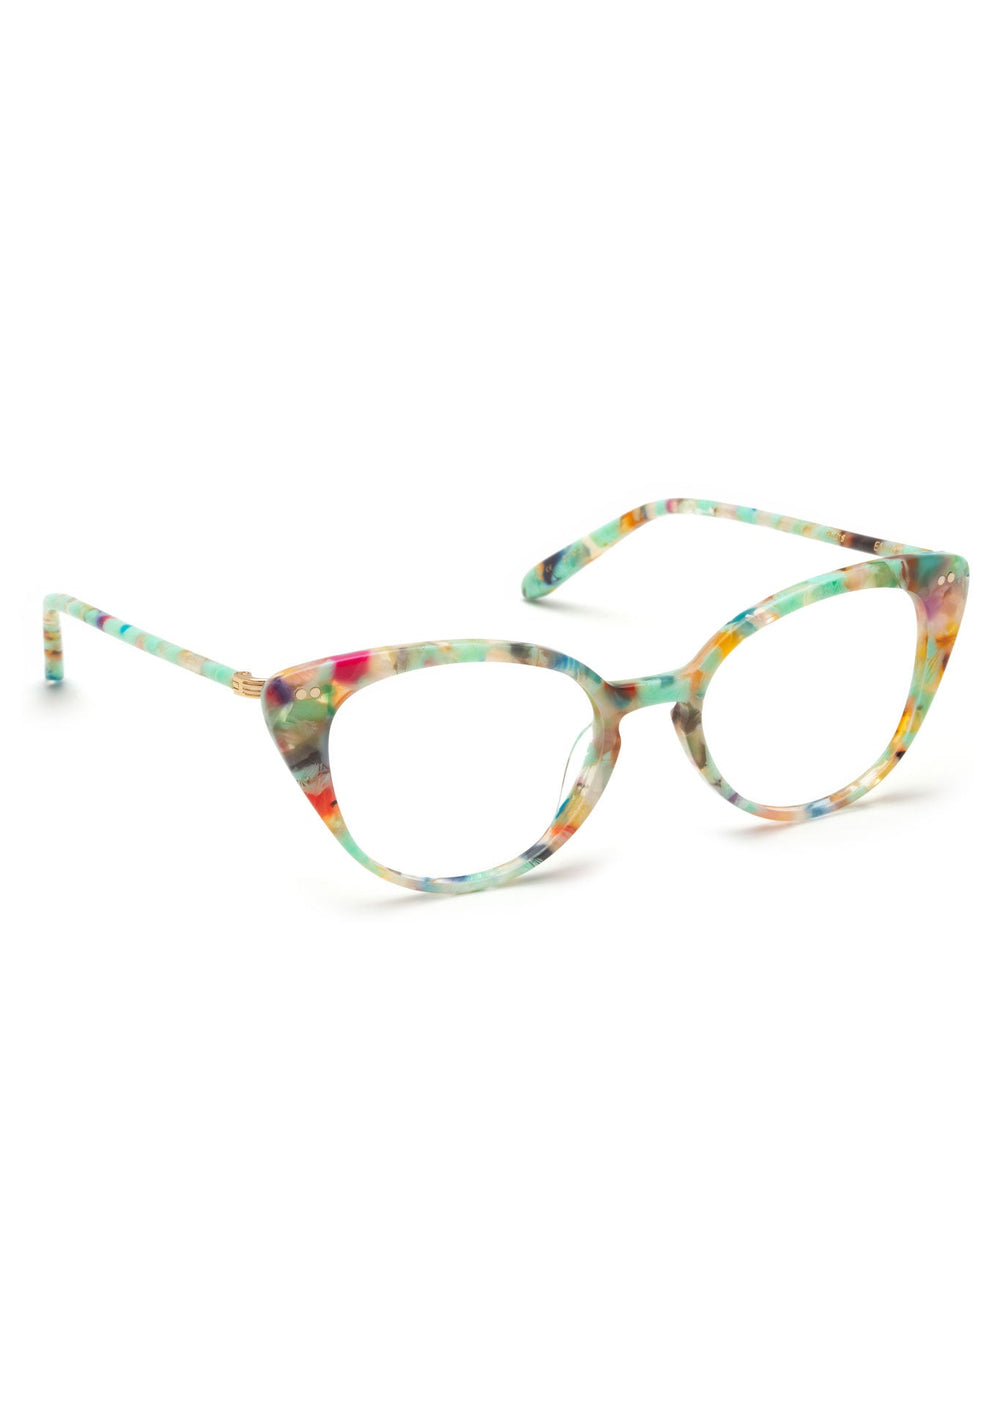 KREWE - Designer Cat Eye Eyeglasses - EMMA | Macaron Handcrafted, luxury colorful tortoise shell acetate eyeglasses. Similar to Oliver Peoples eyeglasses, moscot eyeglasses, warby parker eyeglasses